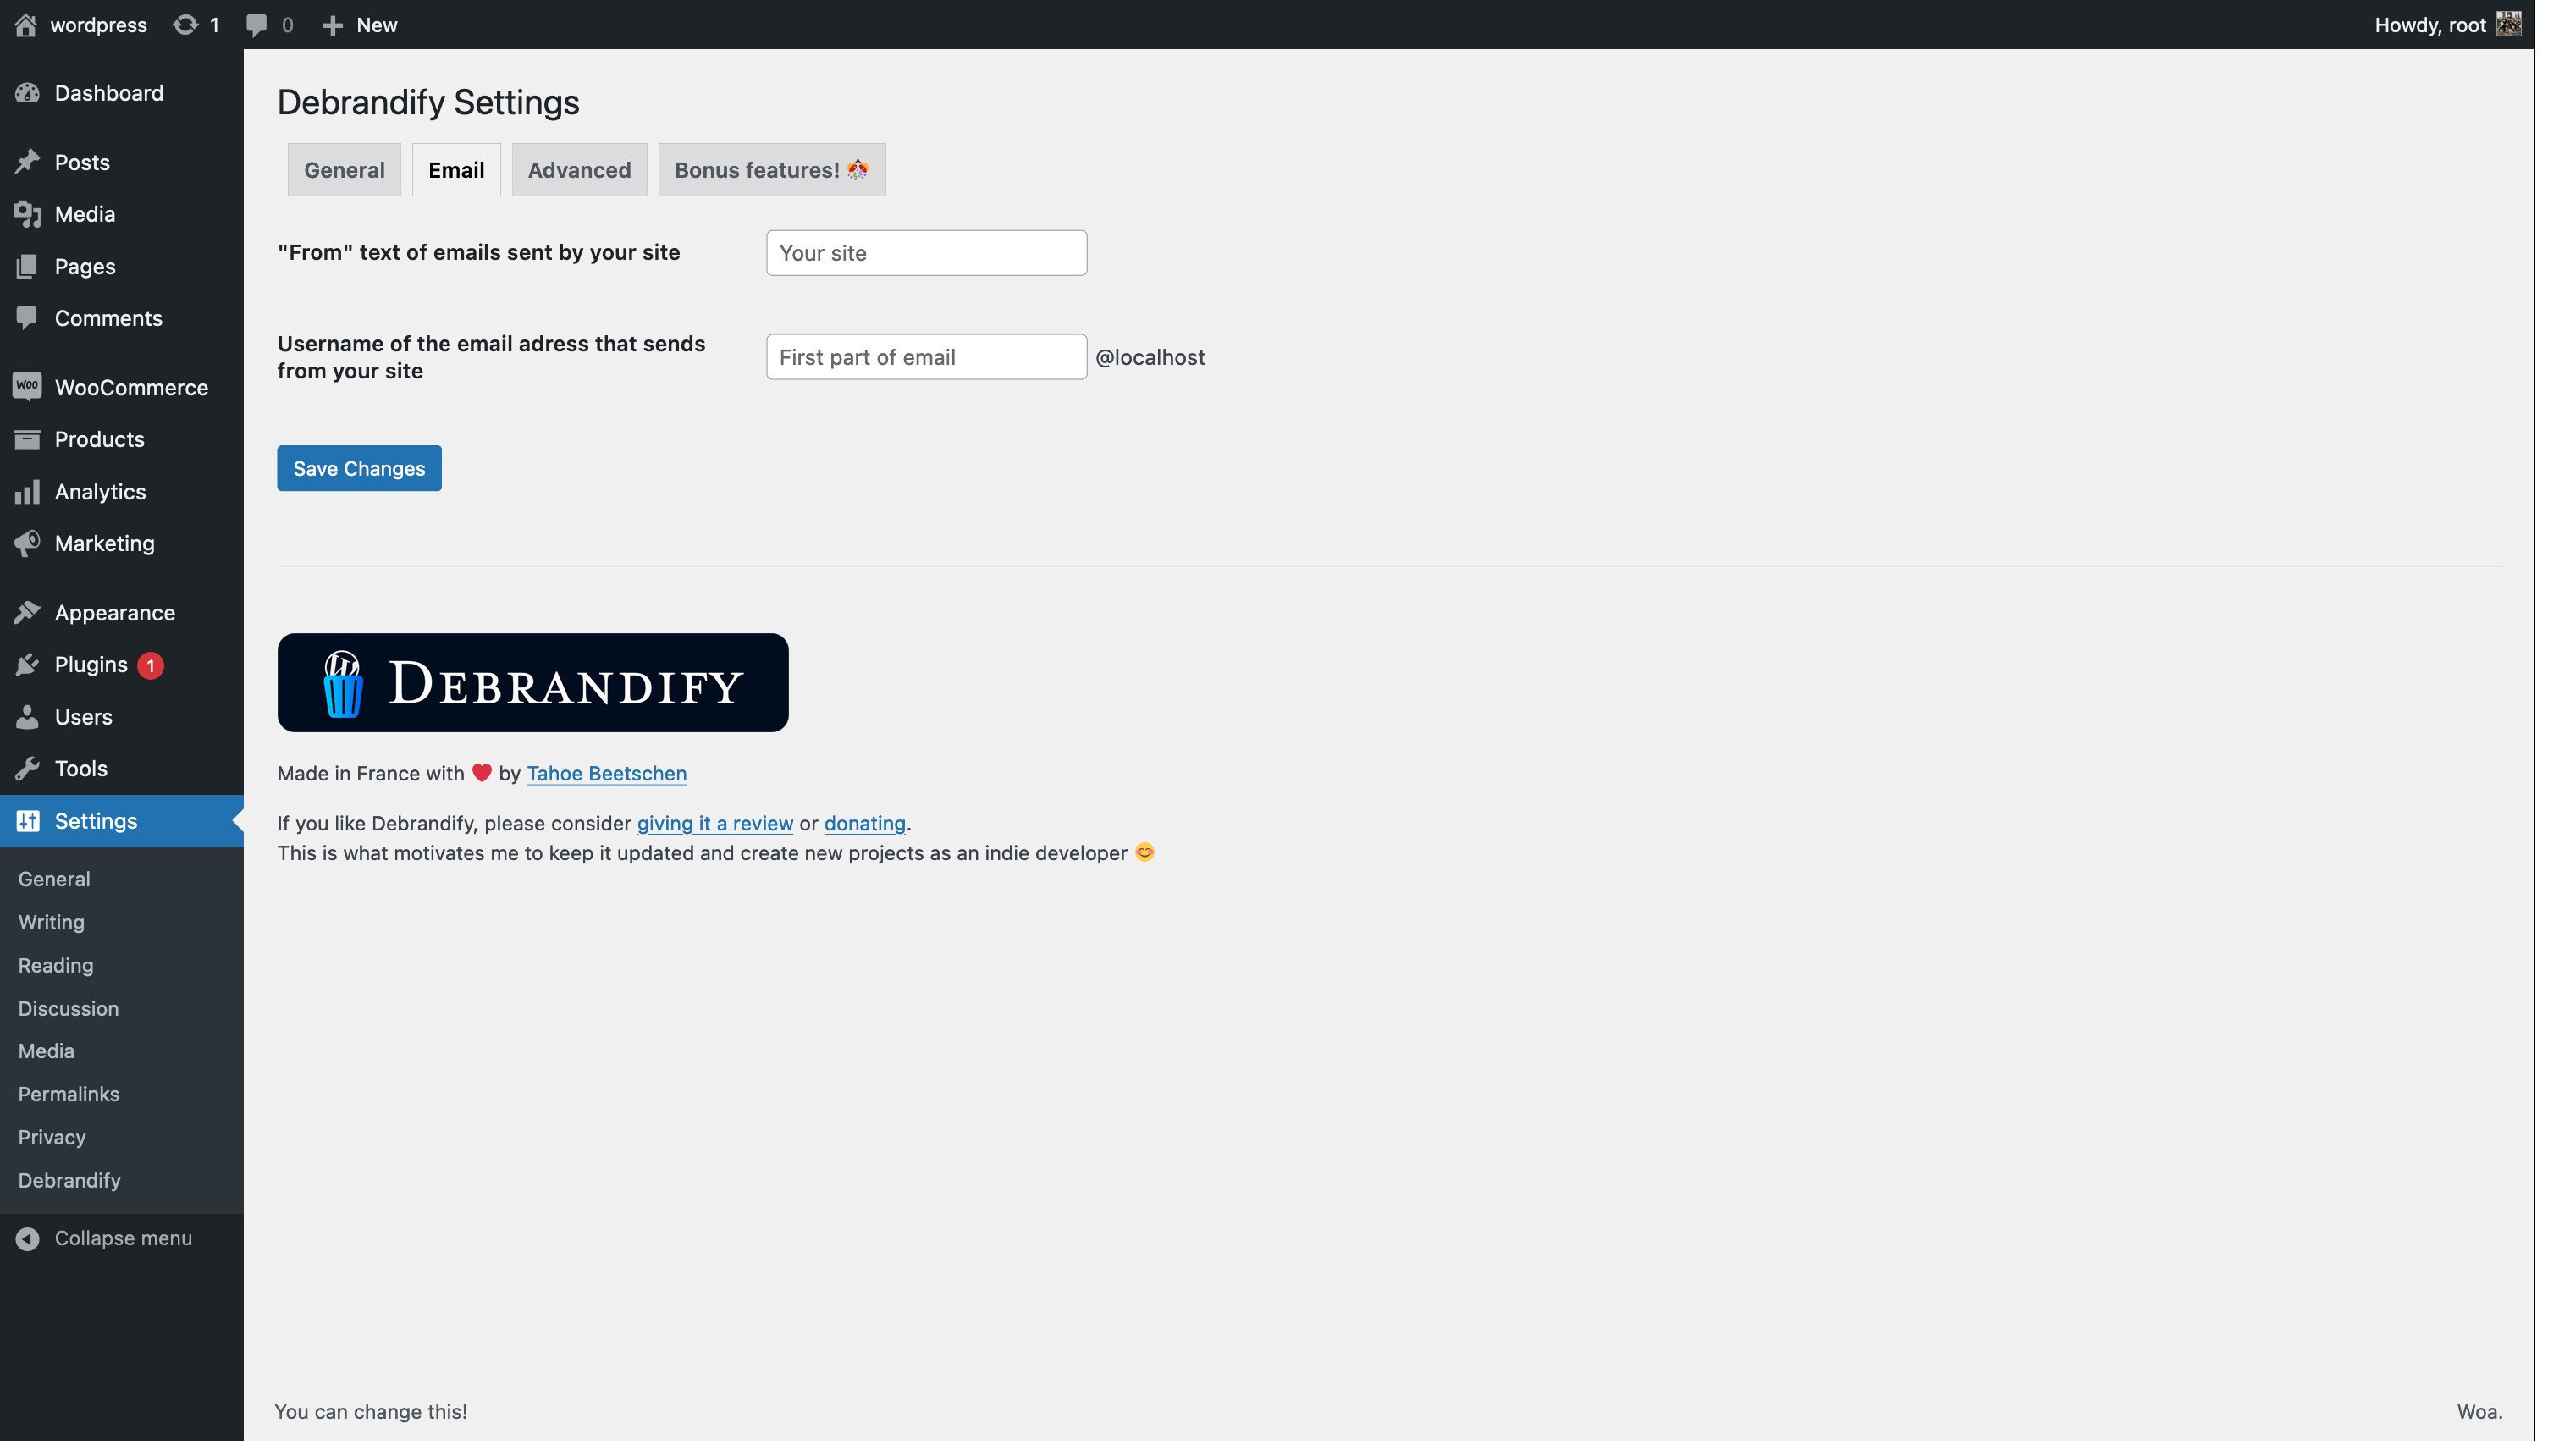 Debrandify's email settings